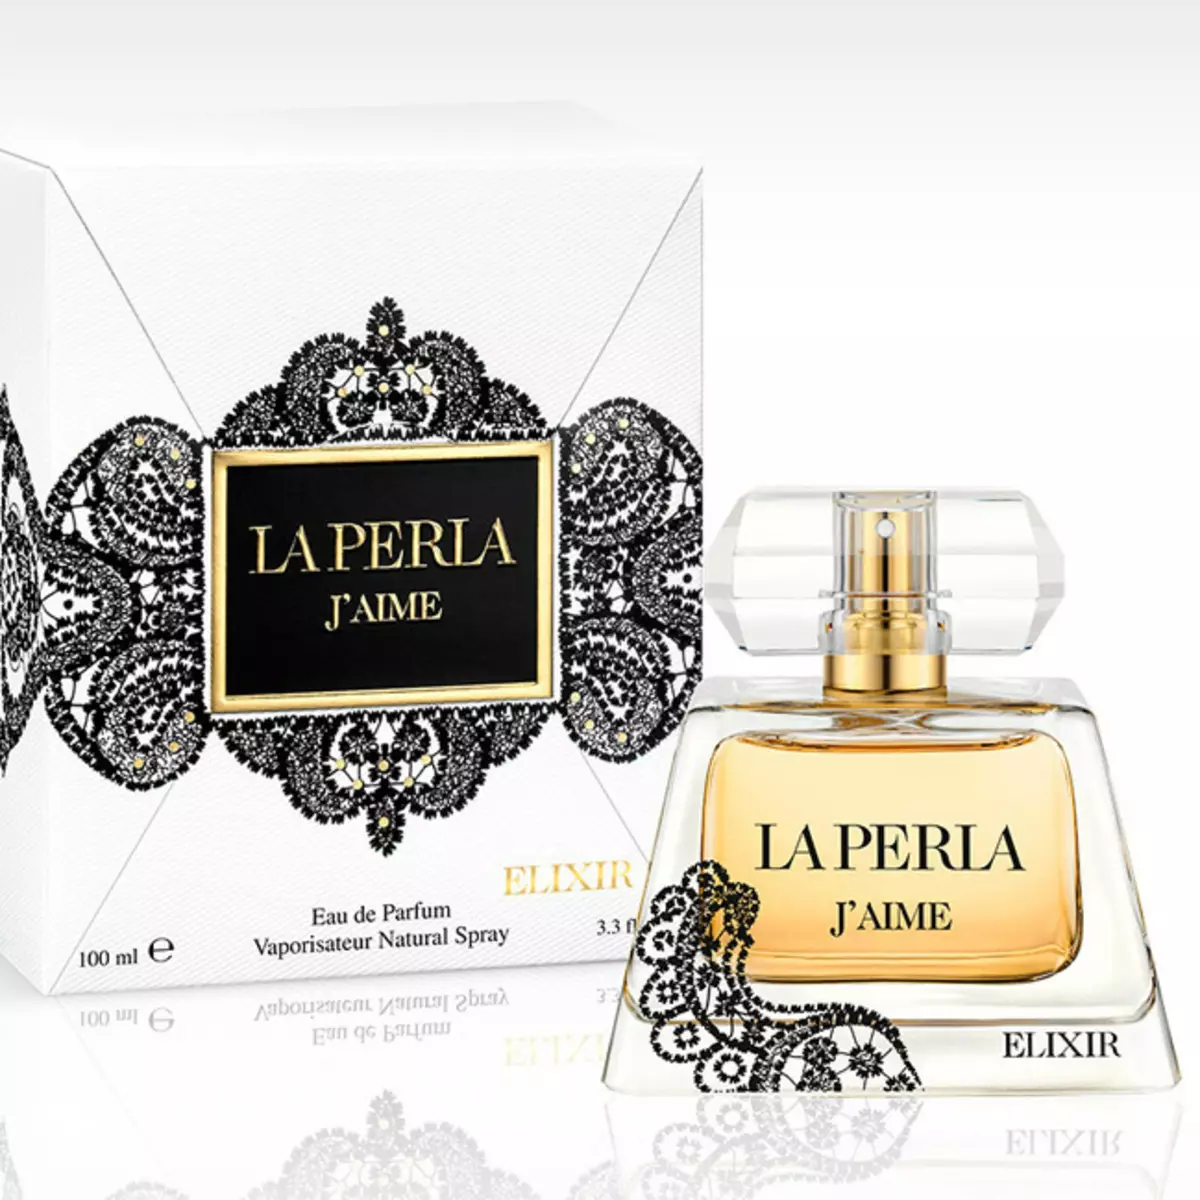 Parfum La Perla: Praktum foar froulju, Divina-húskewetter, J'aime en Les Fleurs, La Perla Airvors 25270_2